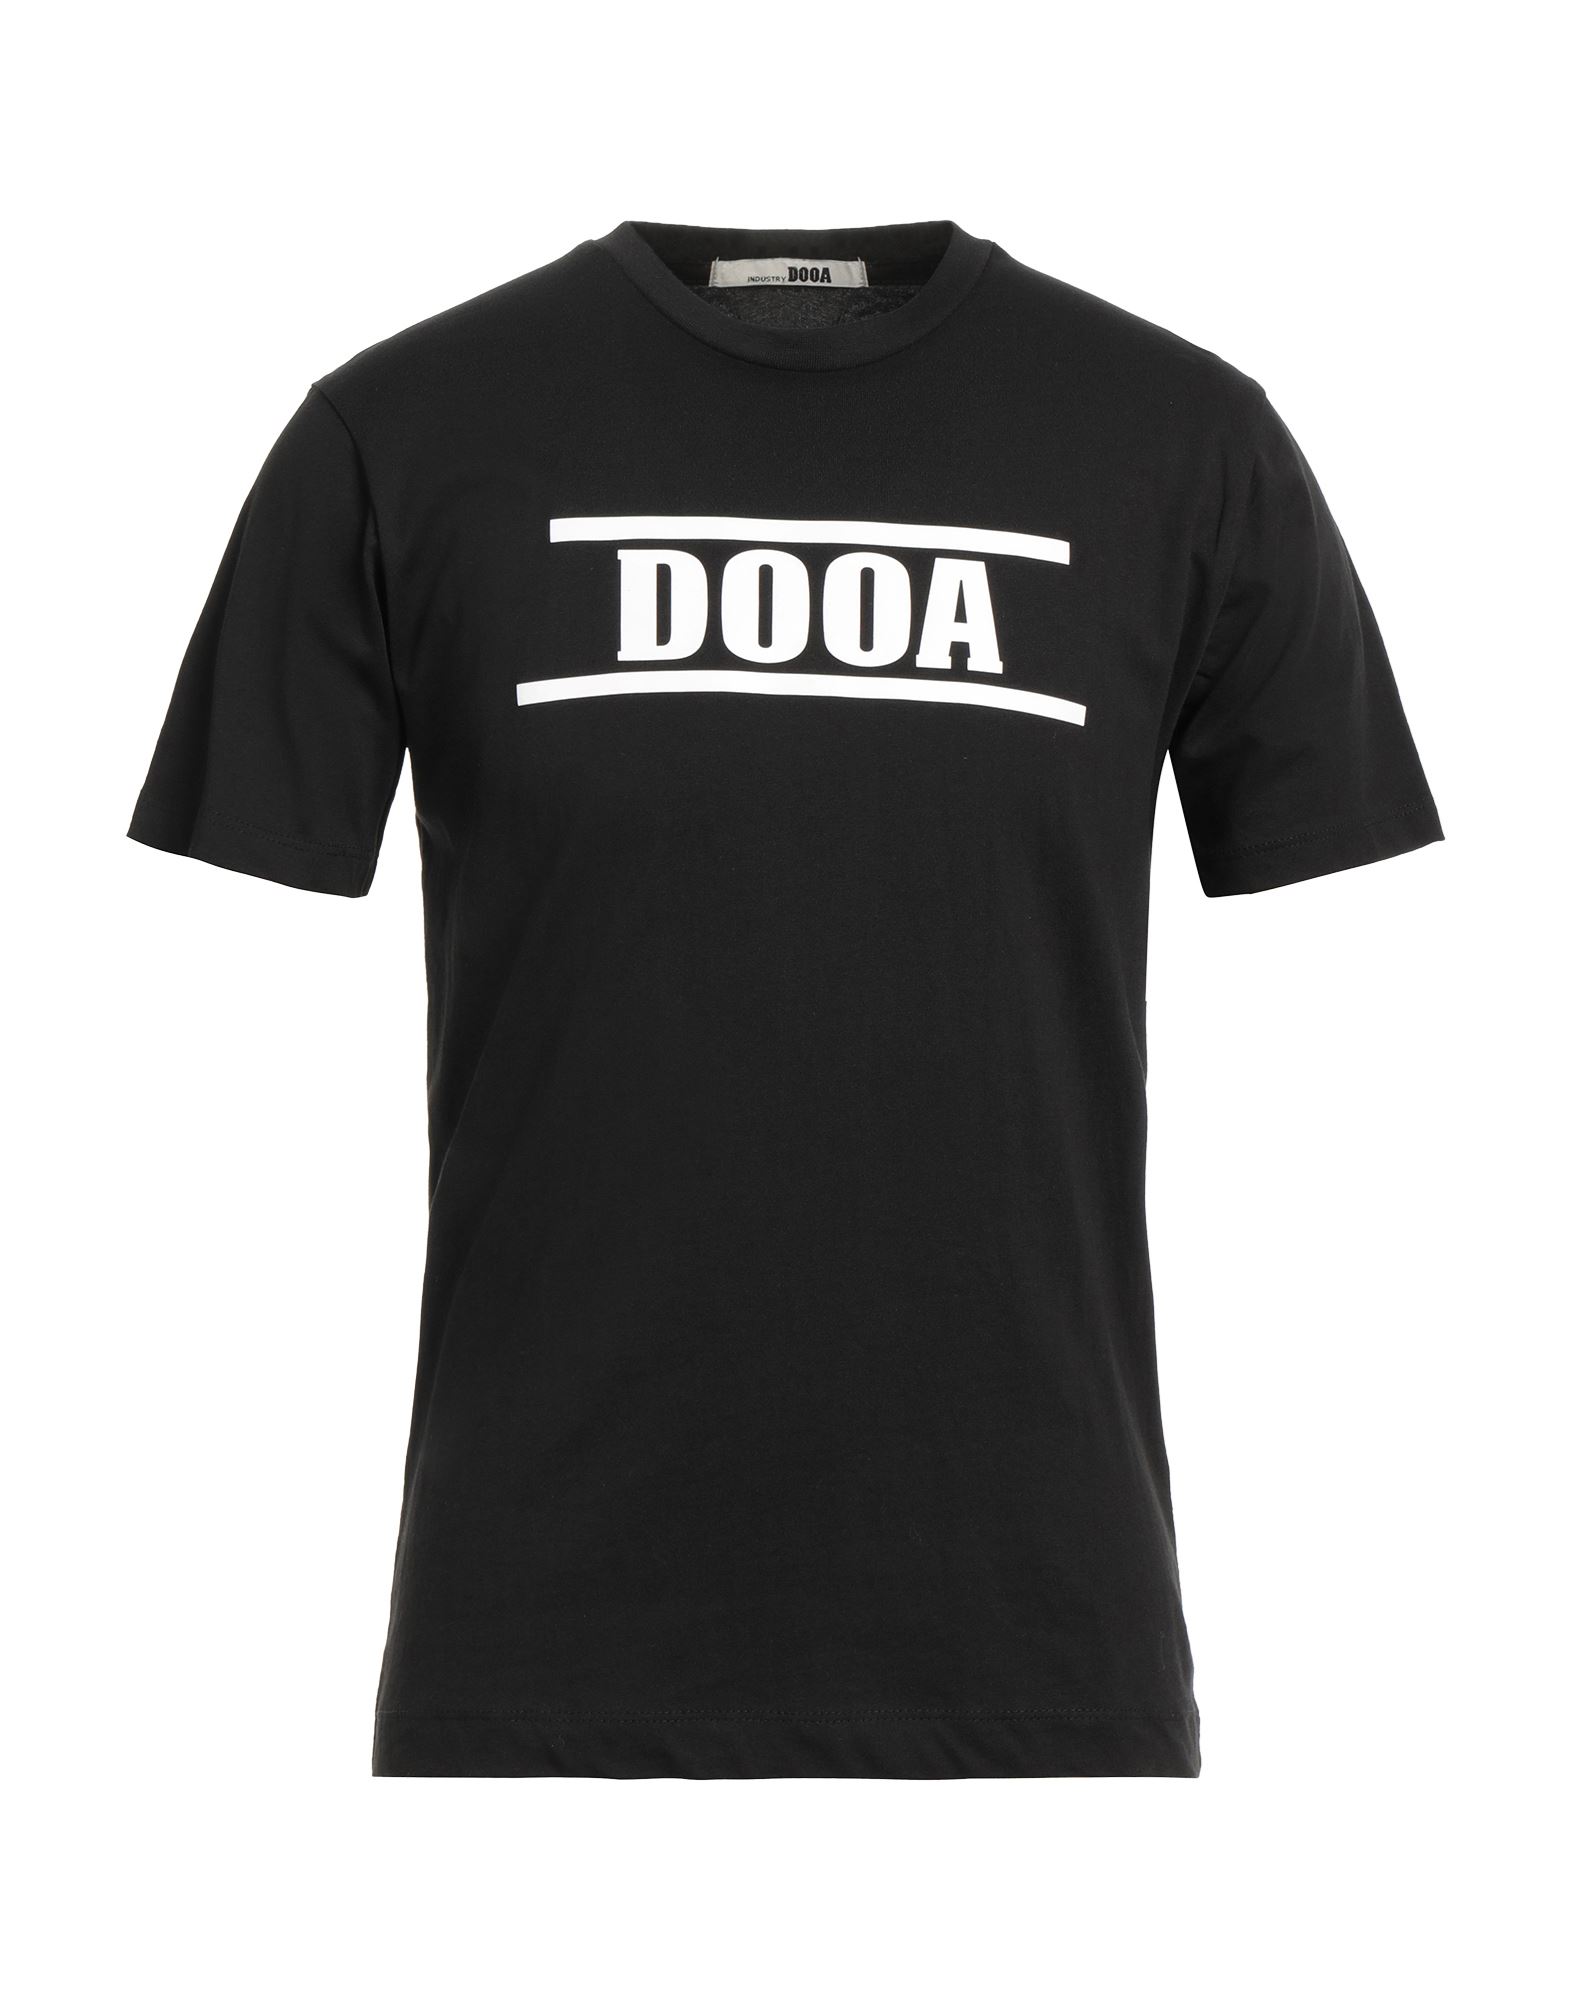 Dooa T-shirts In Black